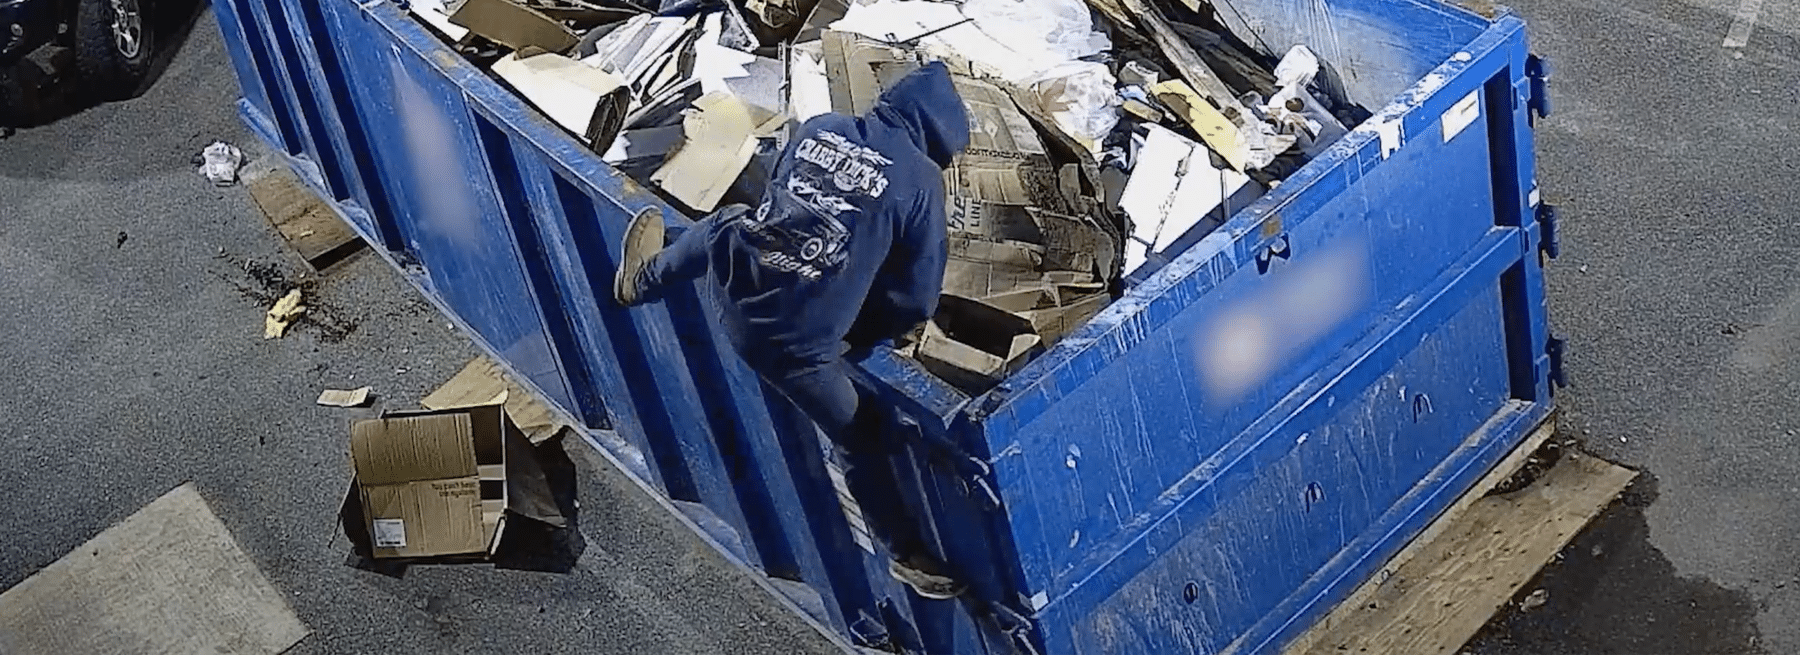 dumpster diver at Maryland auto dealership